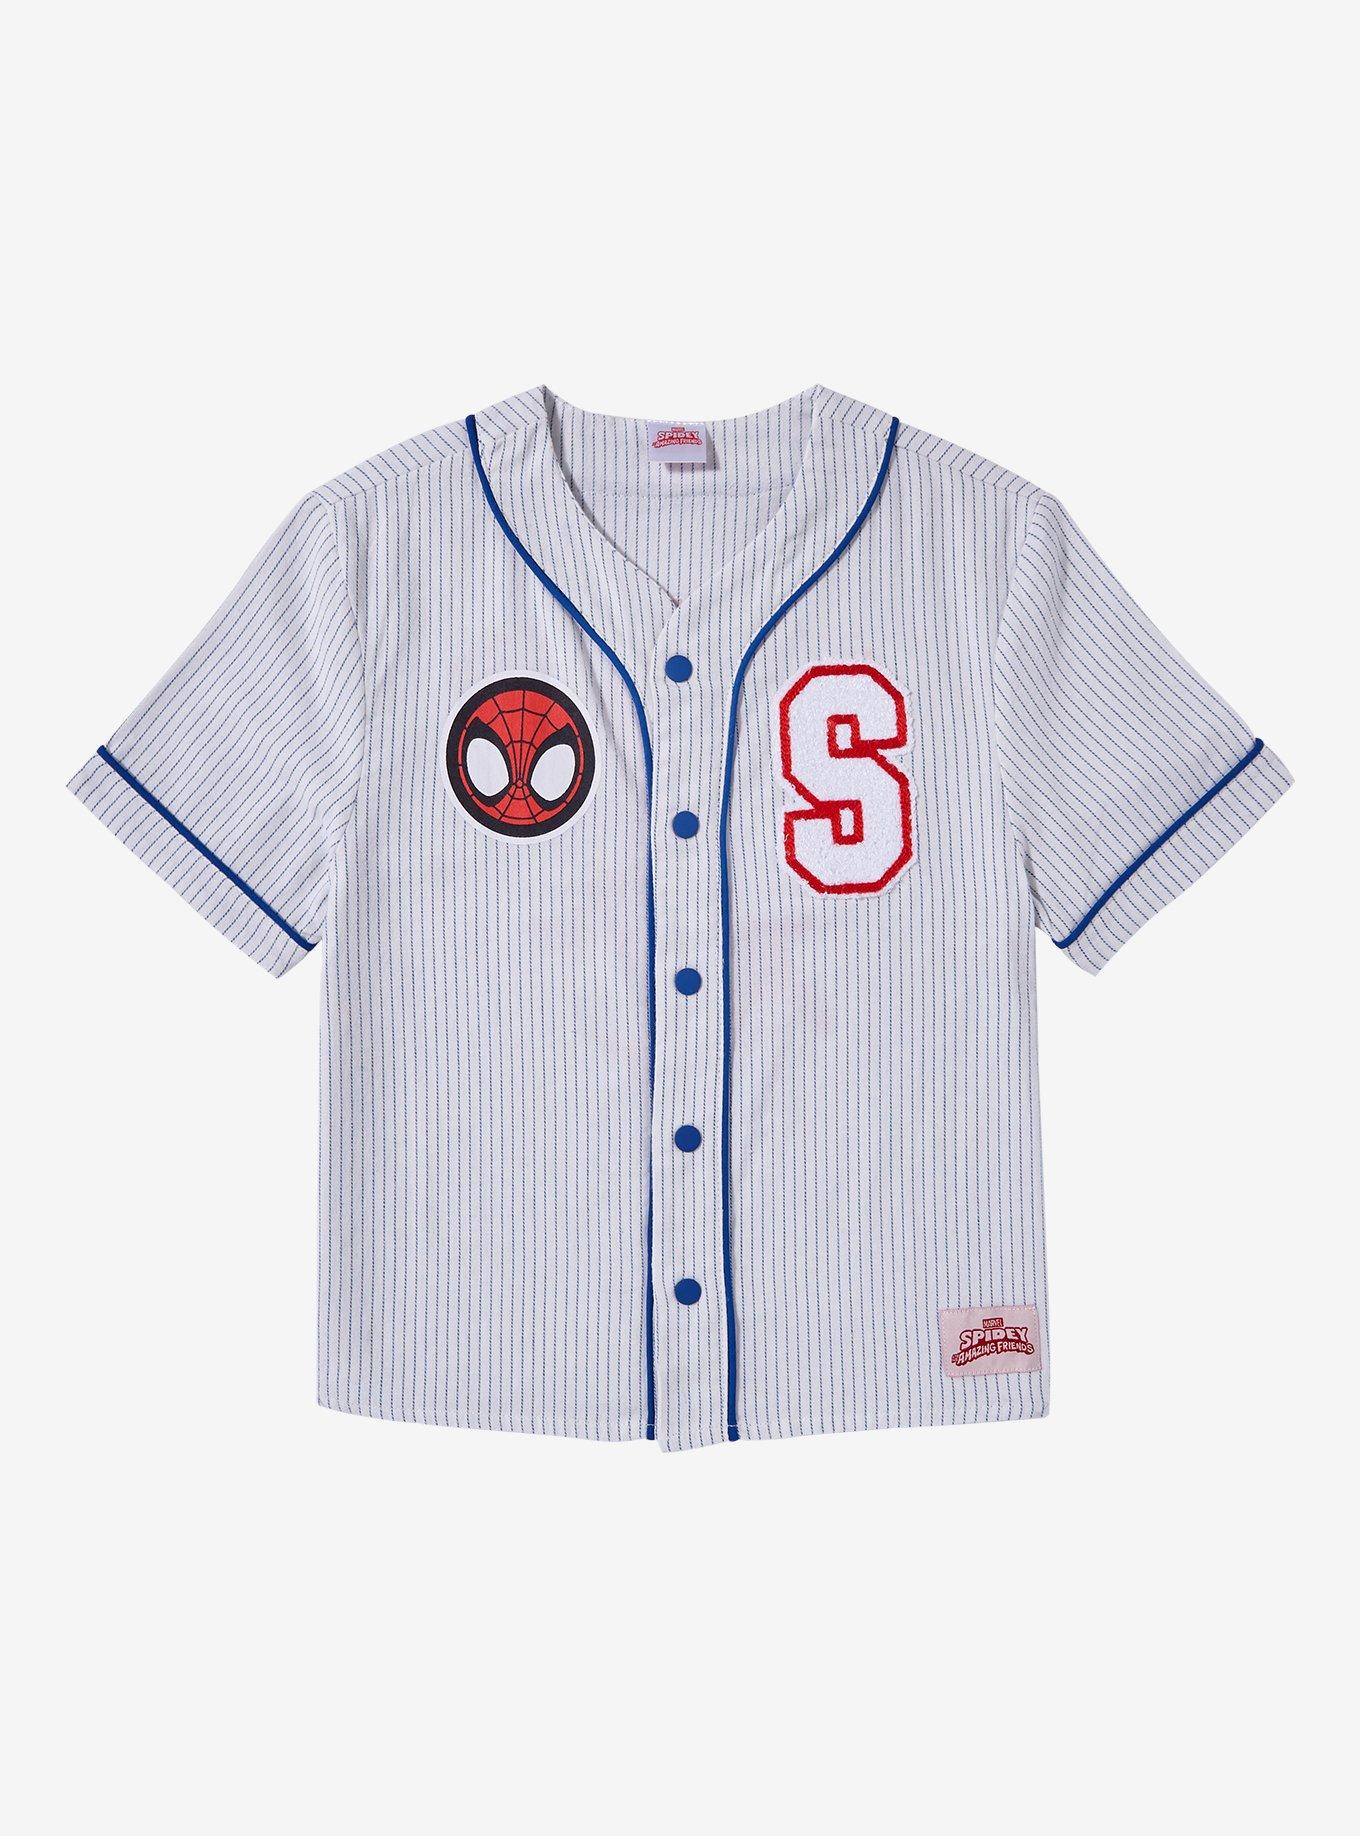 Marvel Spider-Man Toddler Pinstripe Baseball Jersey - BoxLunch Exclusive